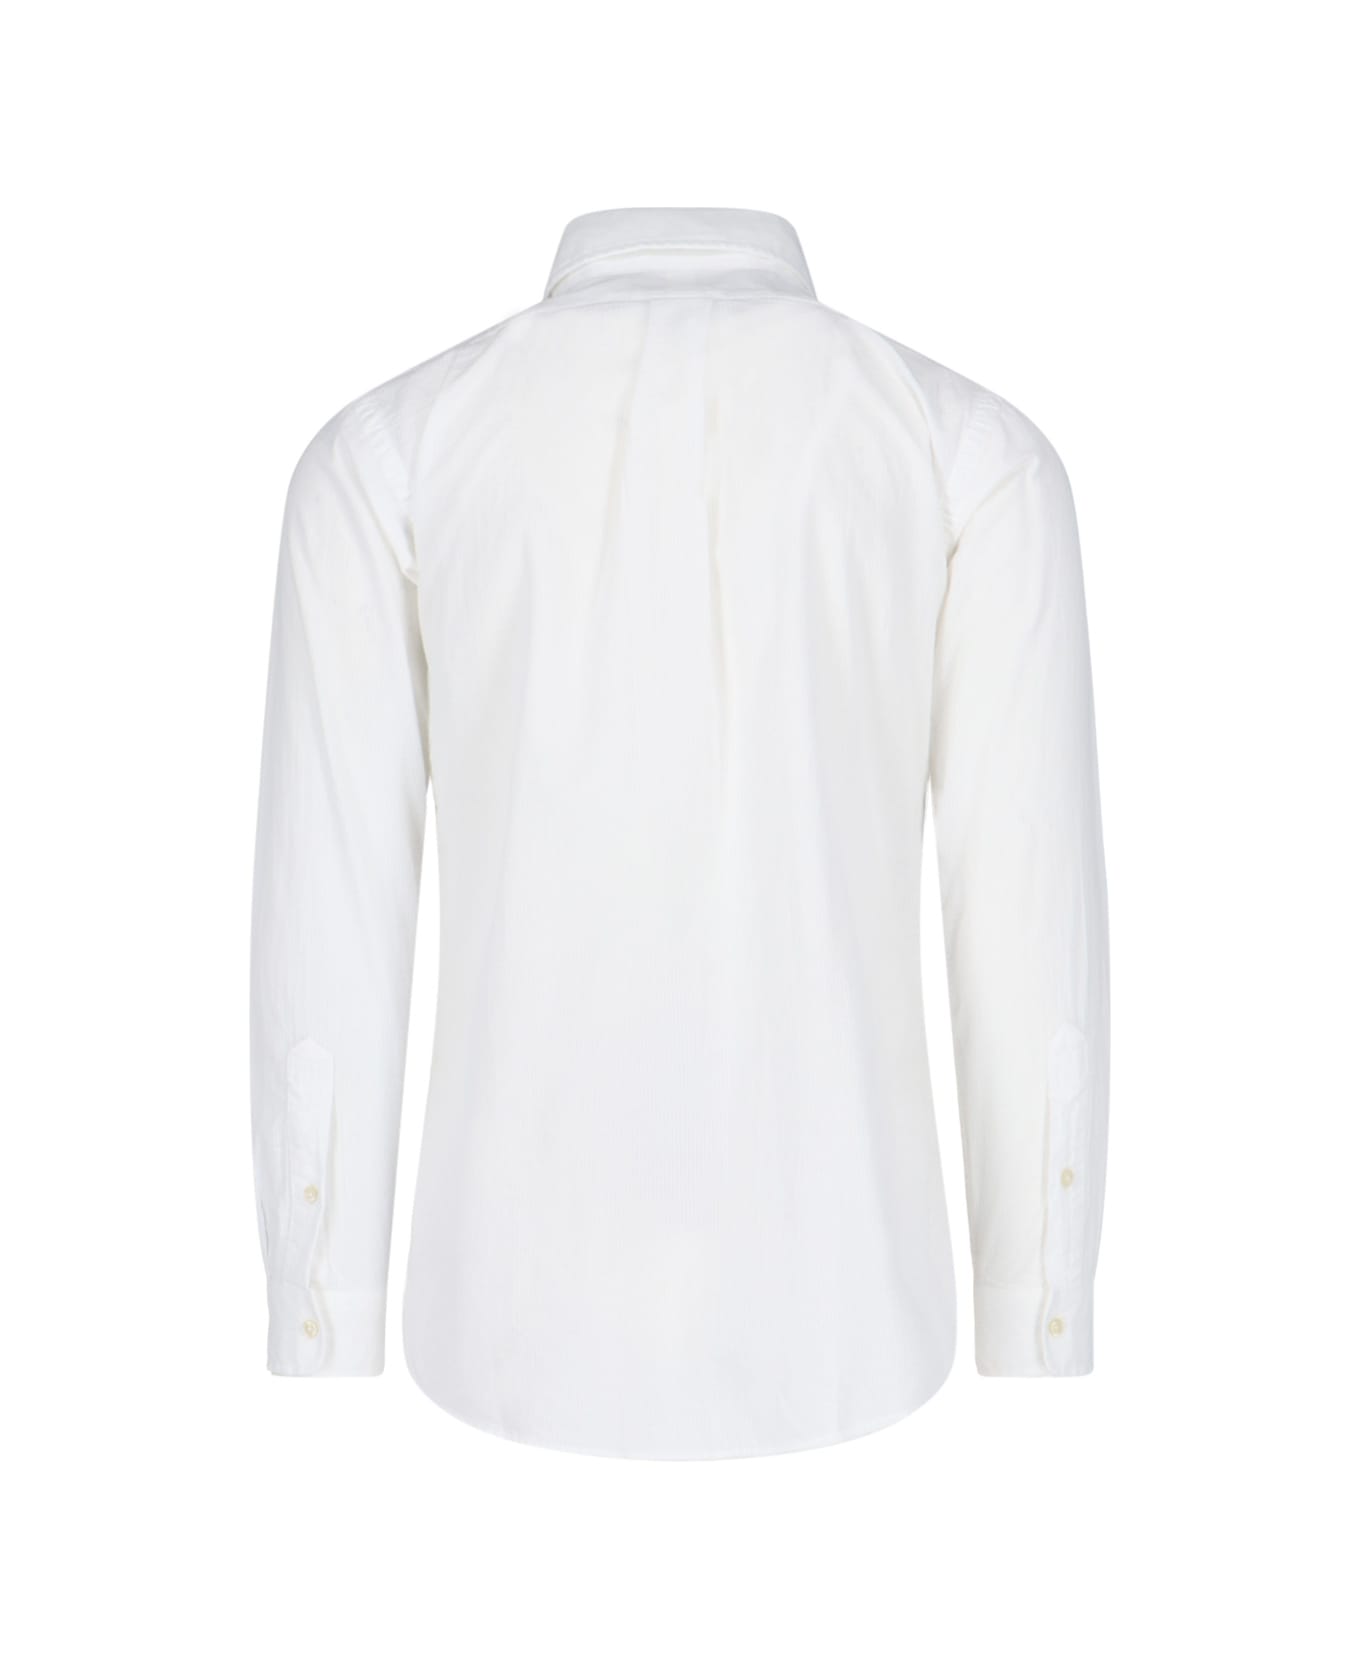 Polo Ralph Lauren Seersucker Shirt - White